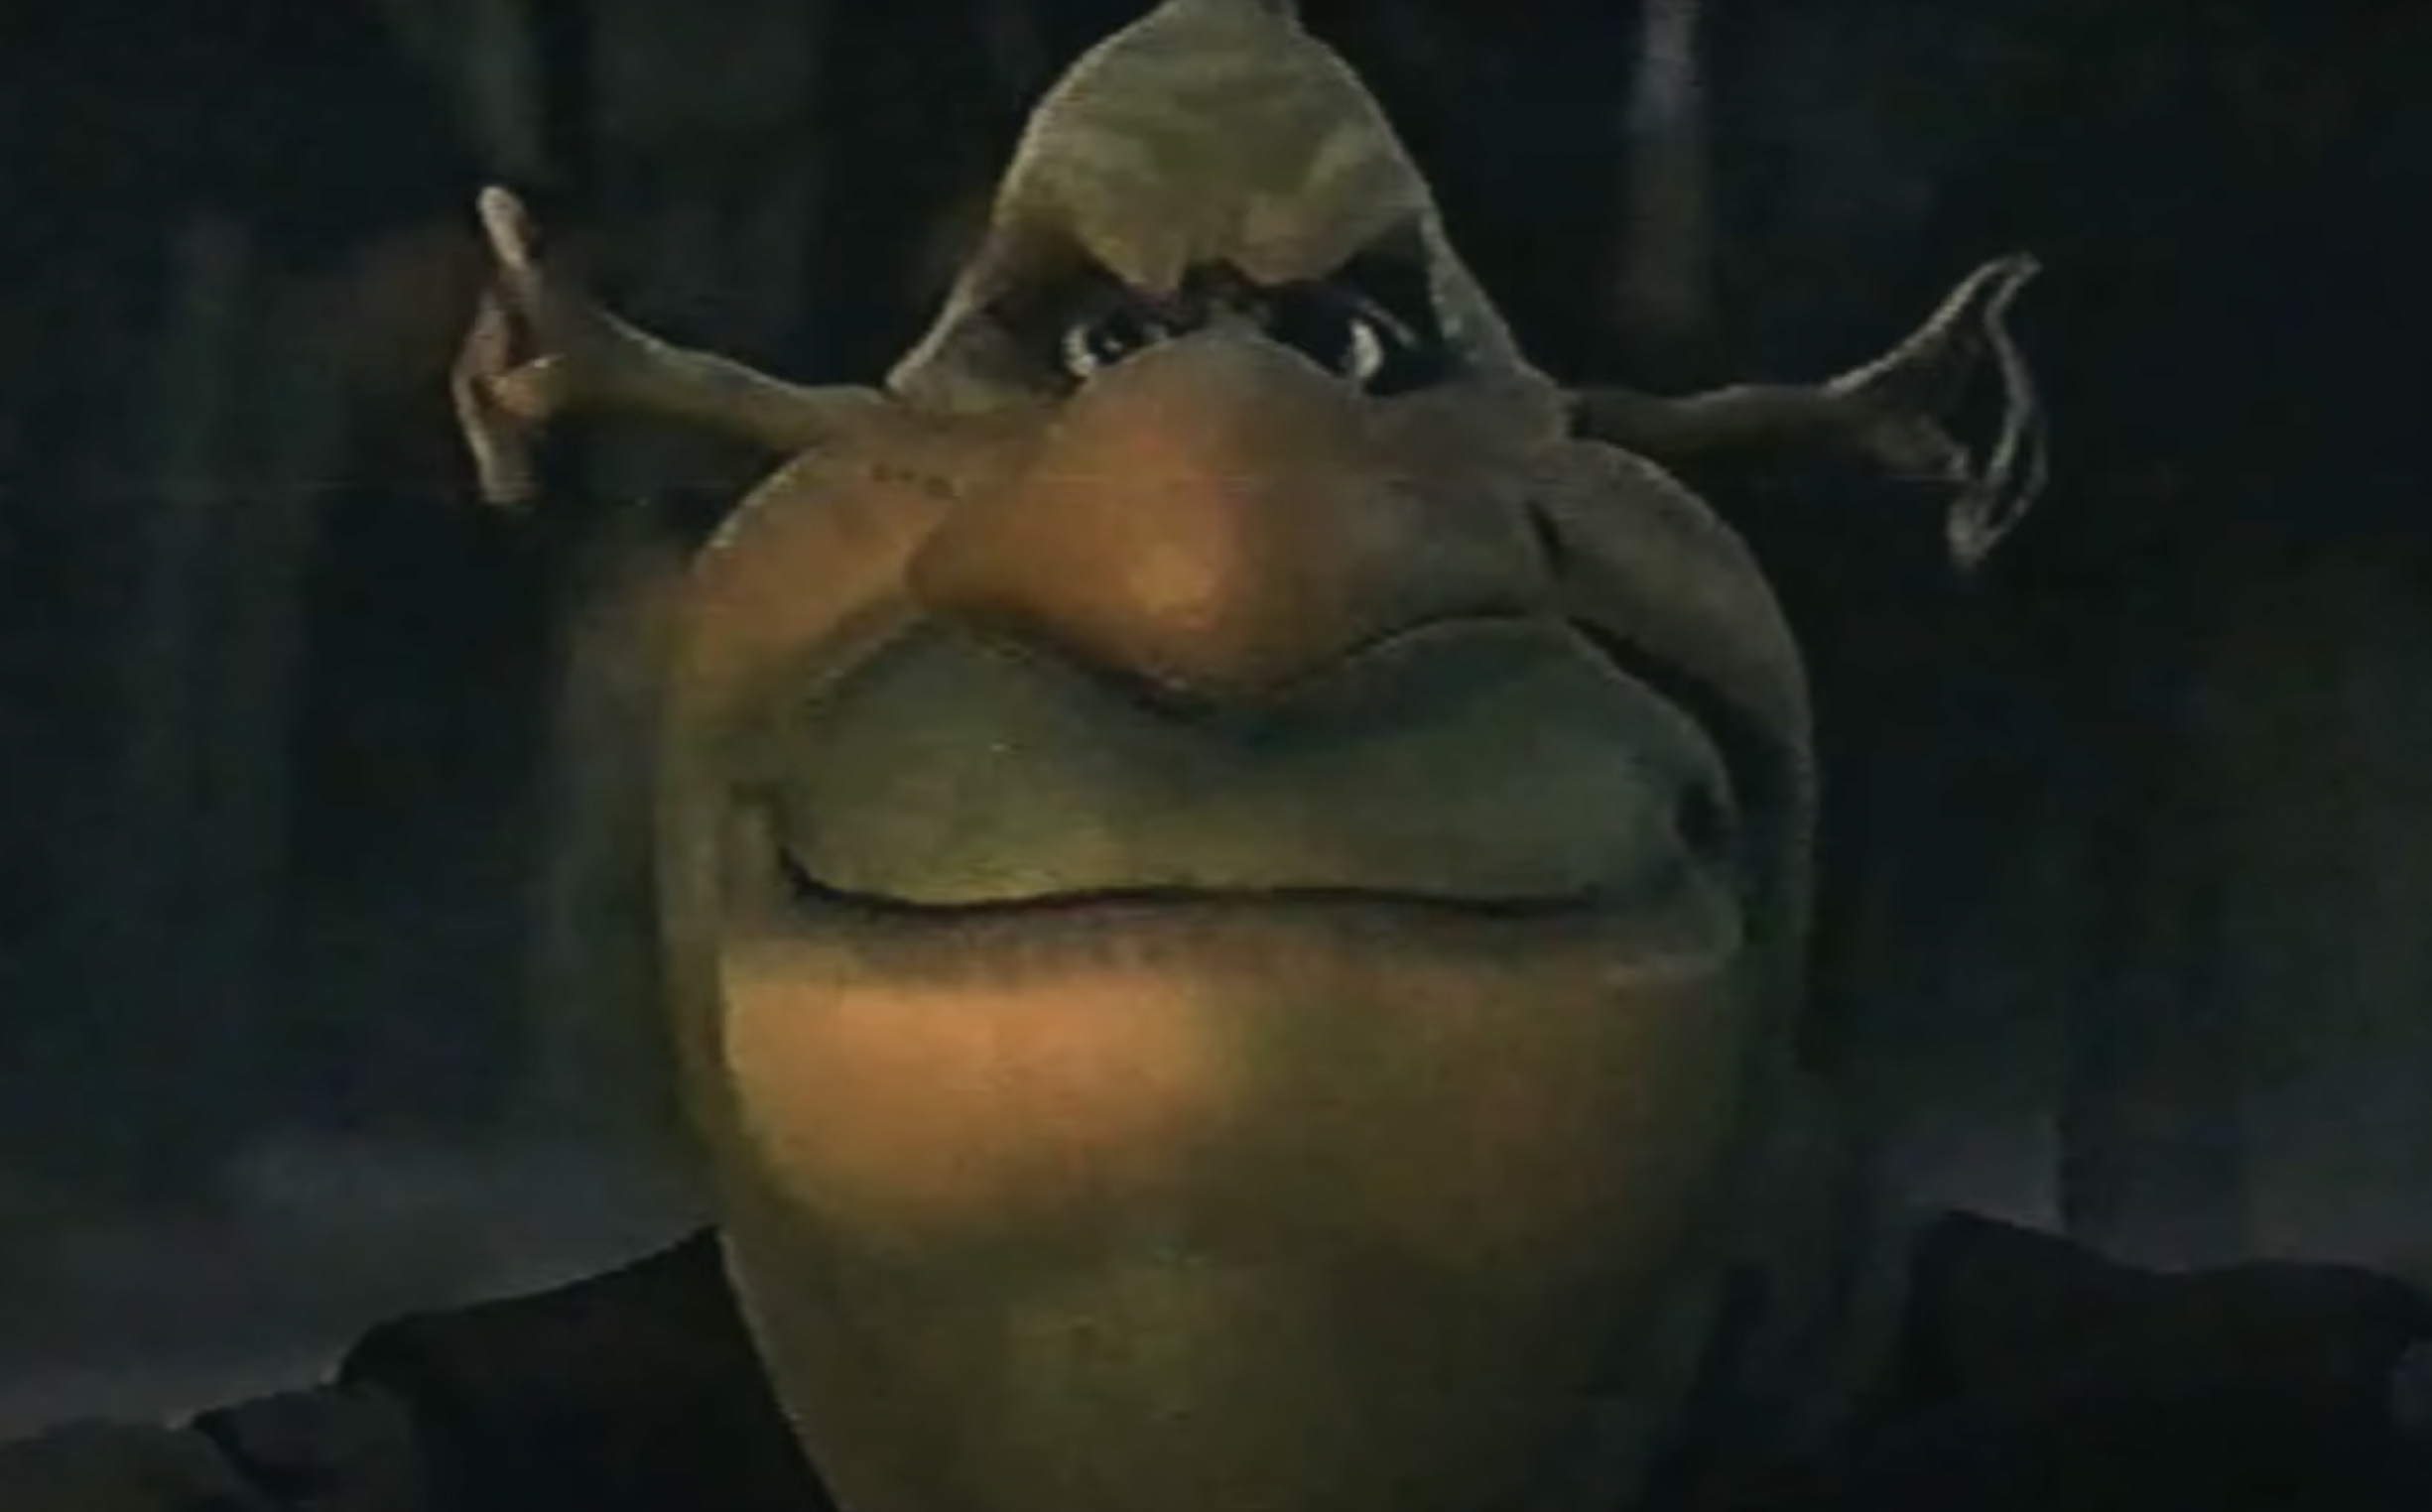 these ai-generated shreks make me feel guilty of something : r/Shrek